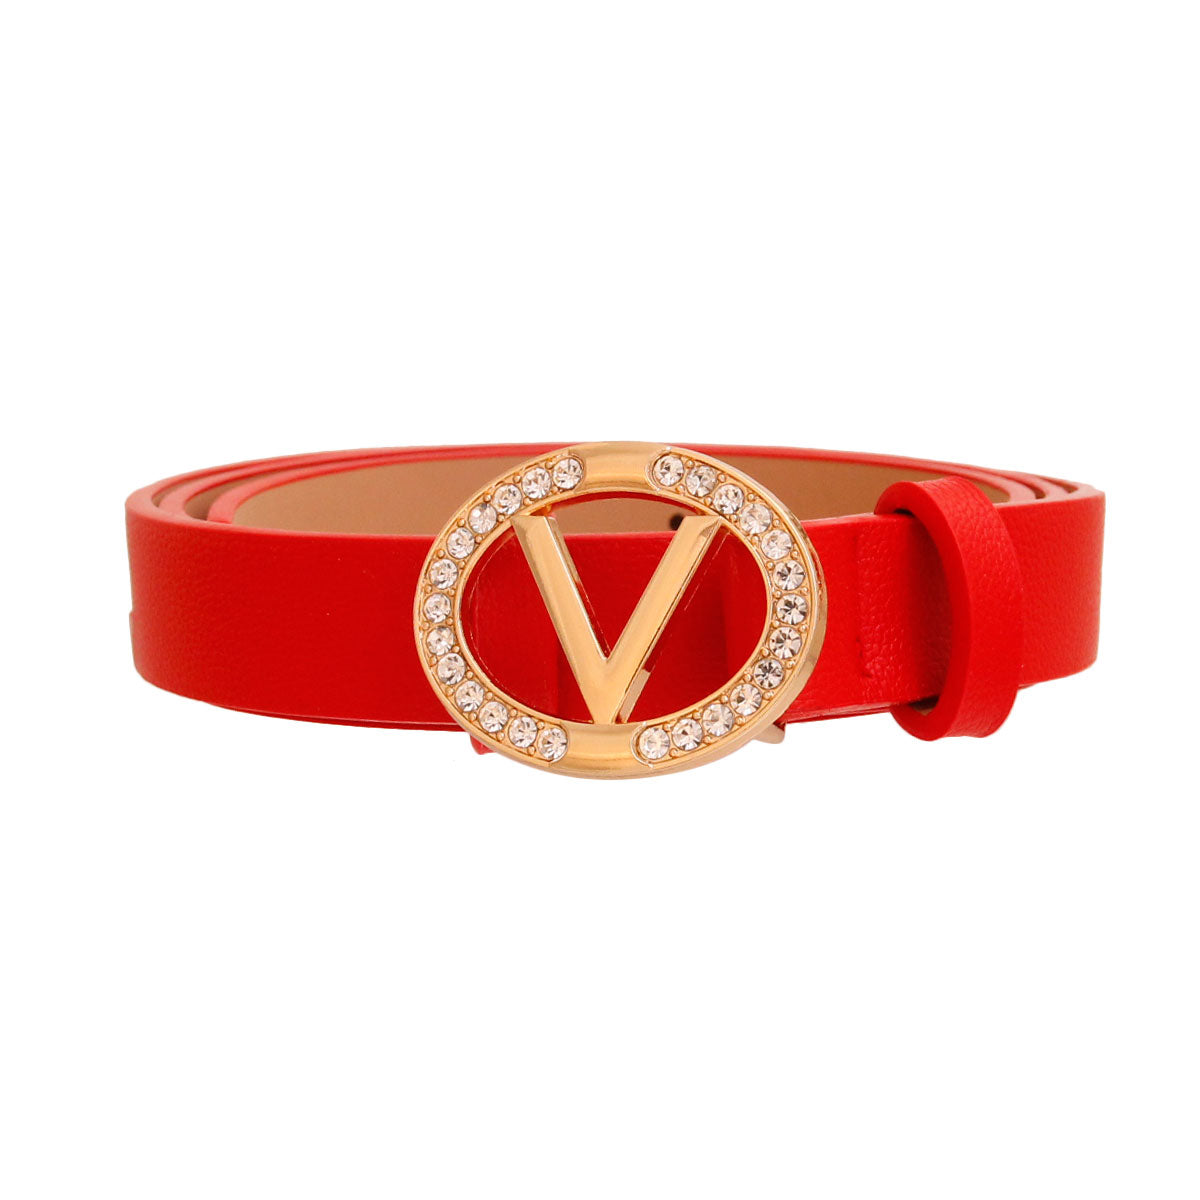 Red and Gold Rhinestone V Designer Belt